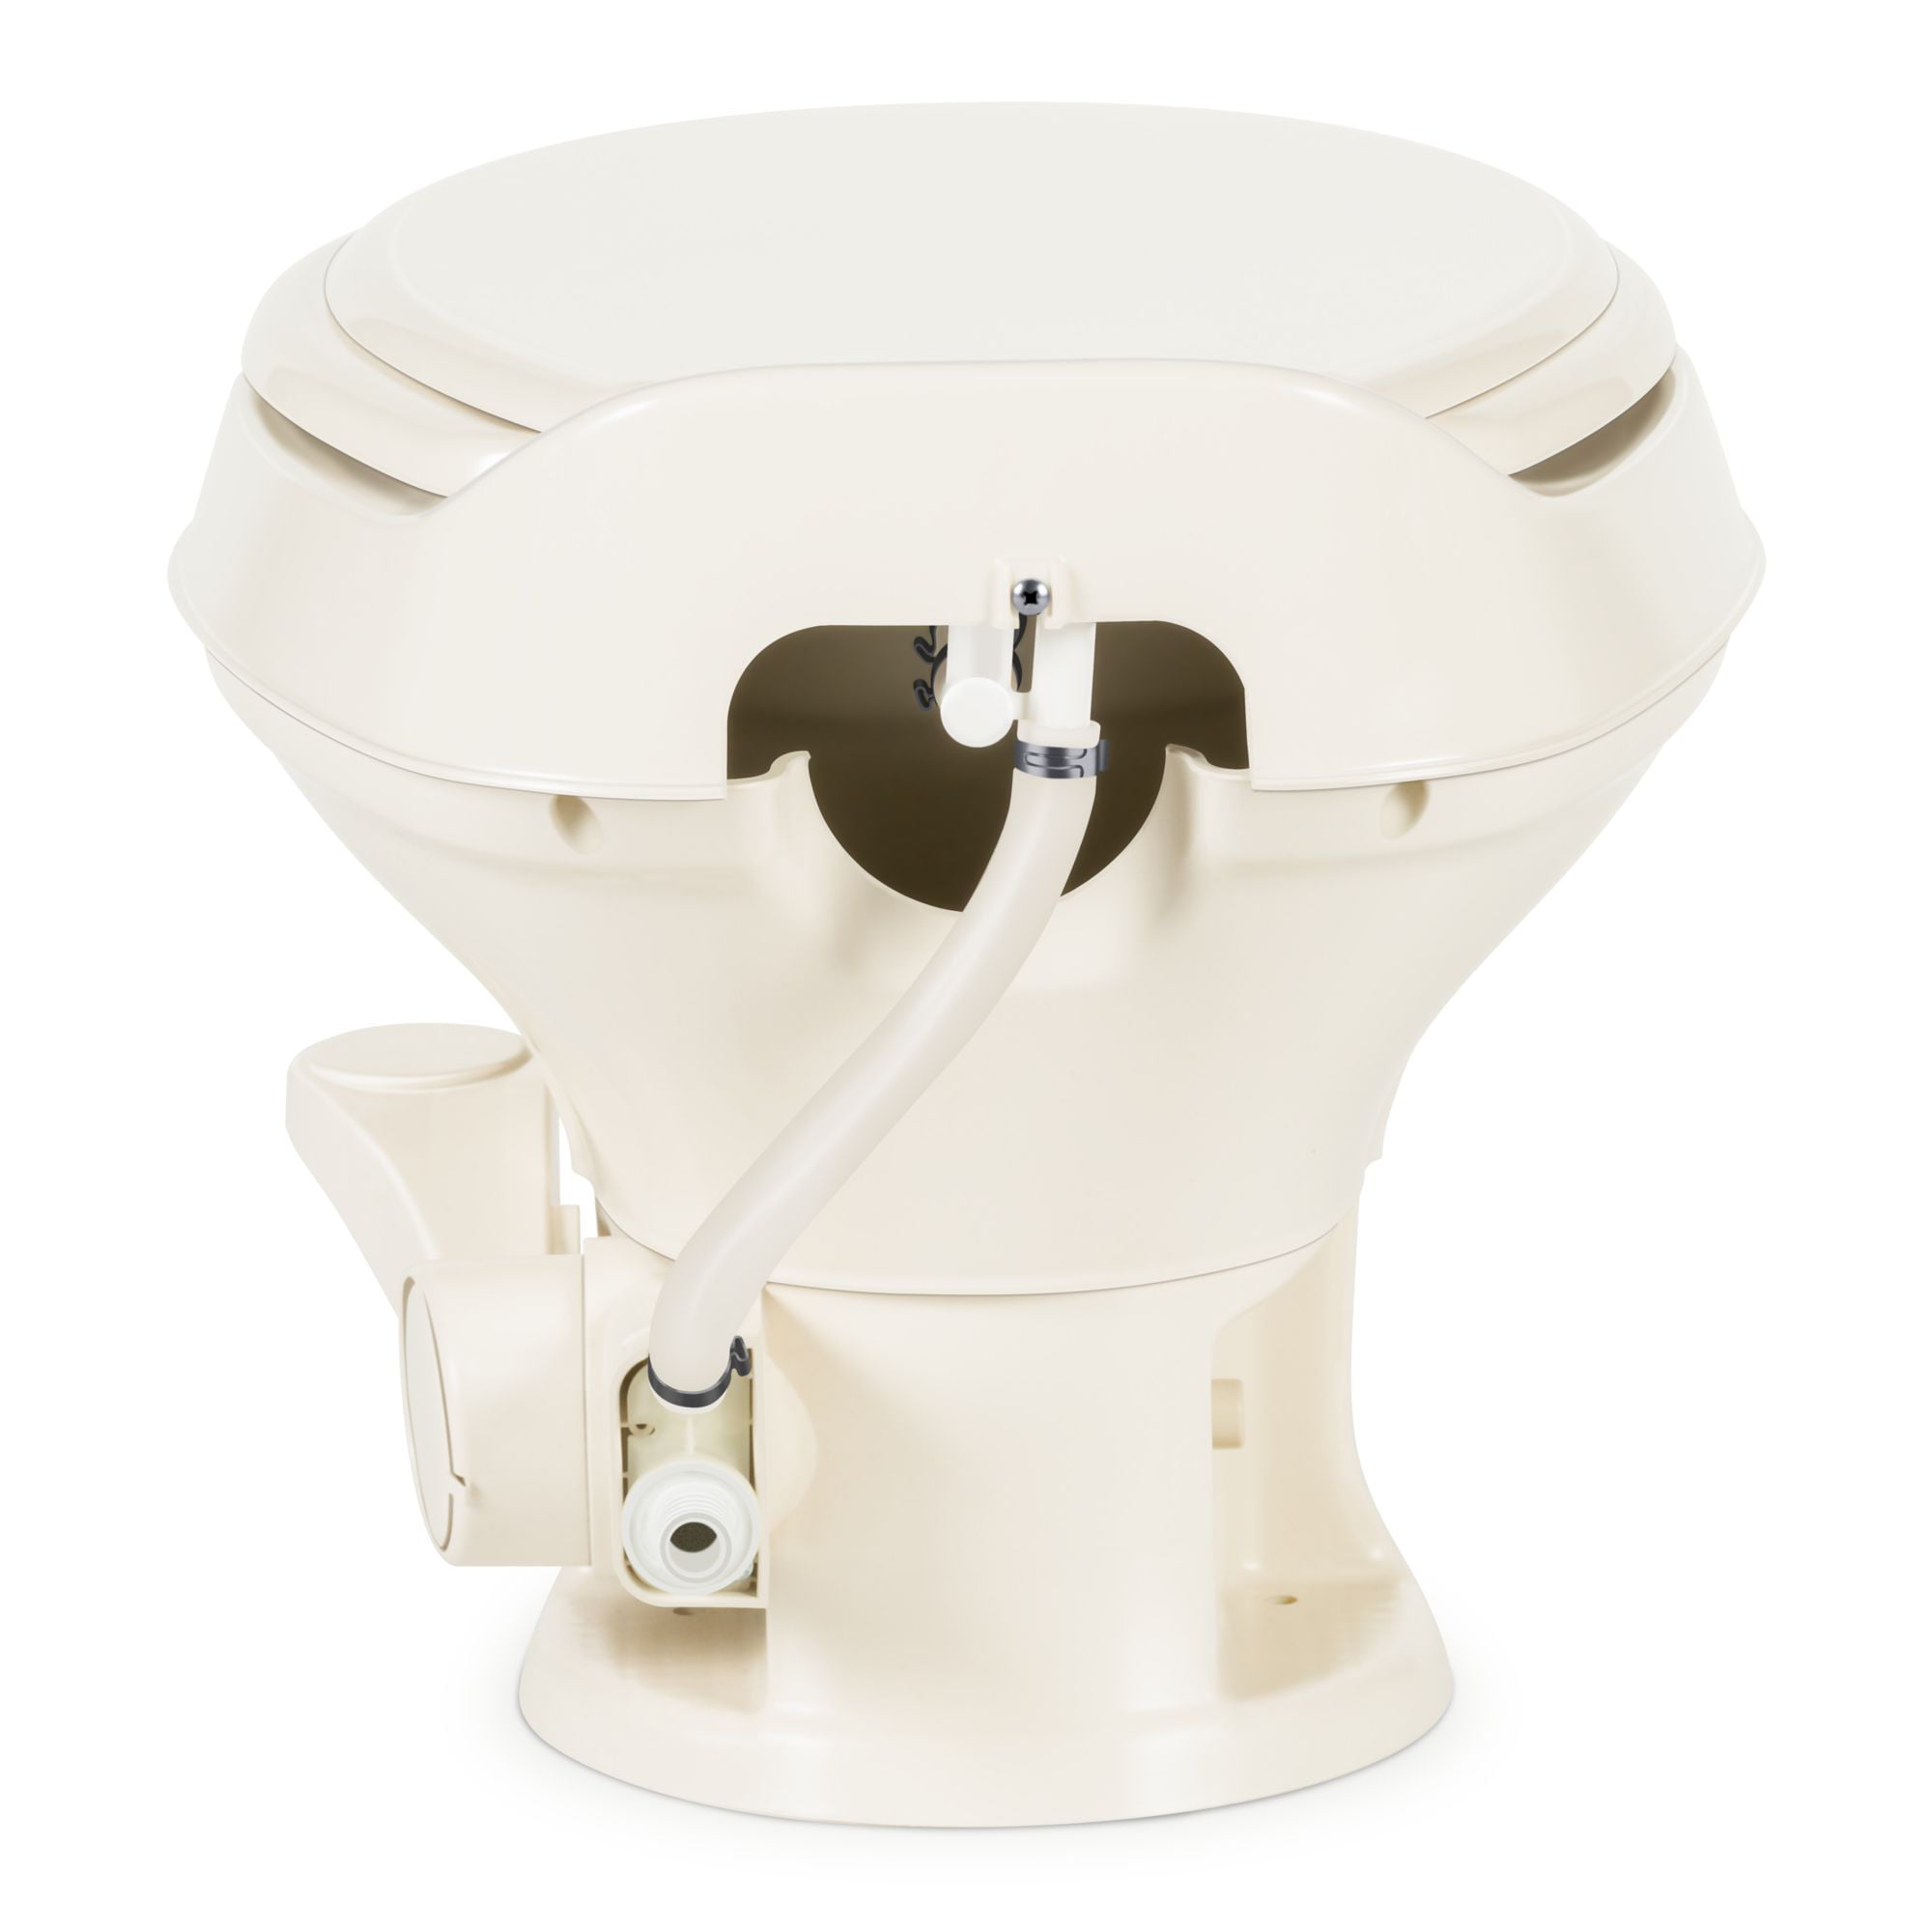 Dometic 300 Series Low Profile Toilet White 